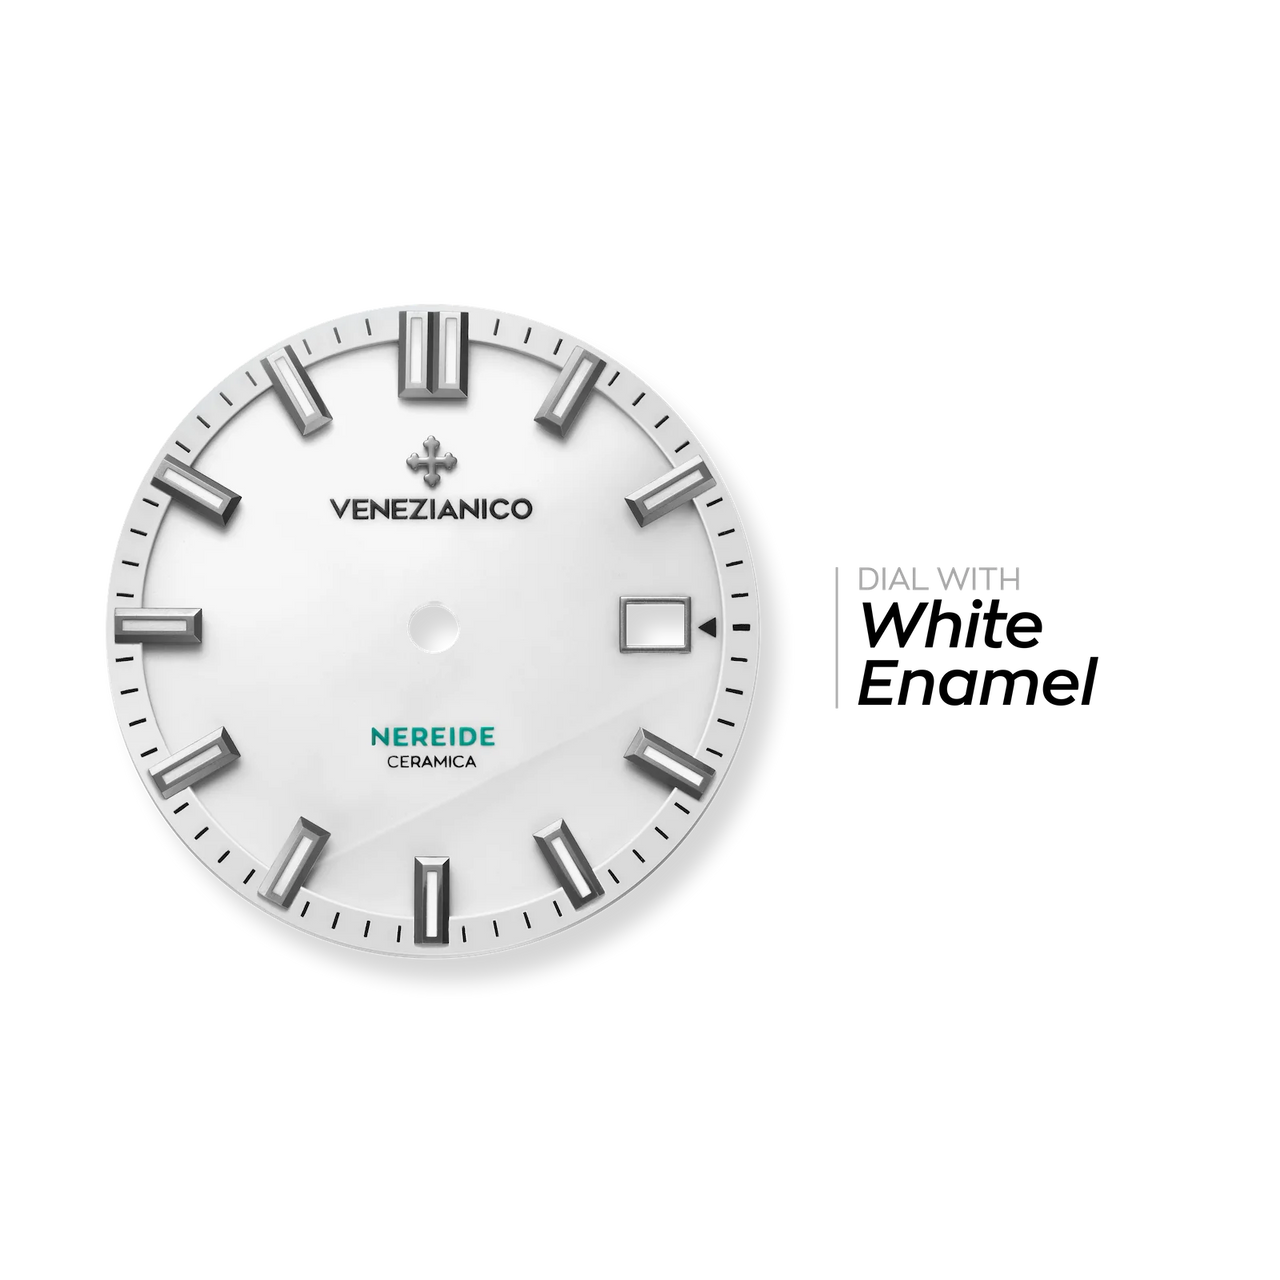 Venezianico Automatic Watch Nereide Ceramica White 4521531